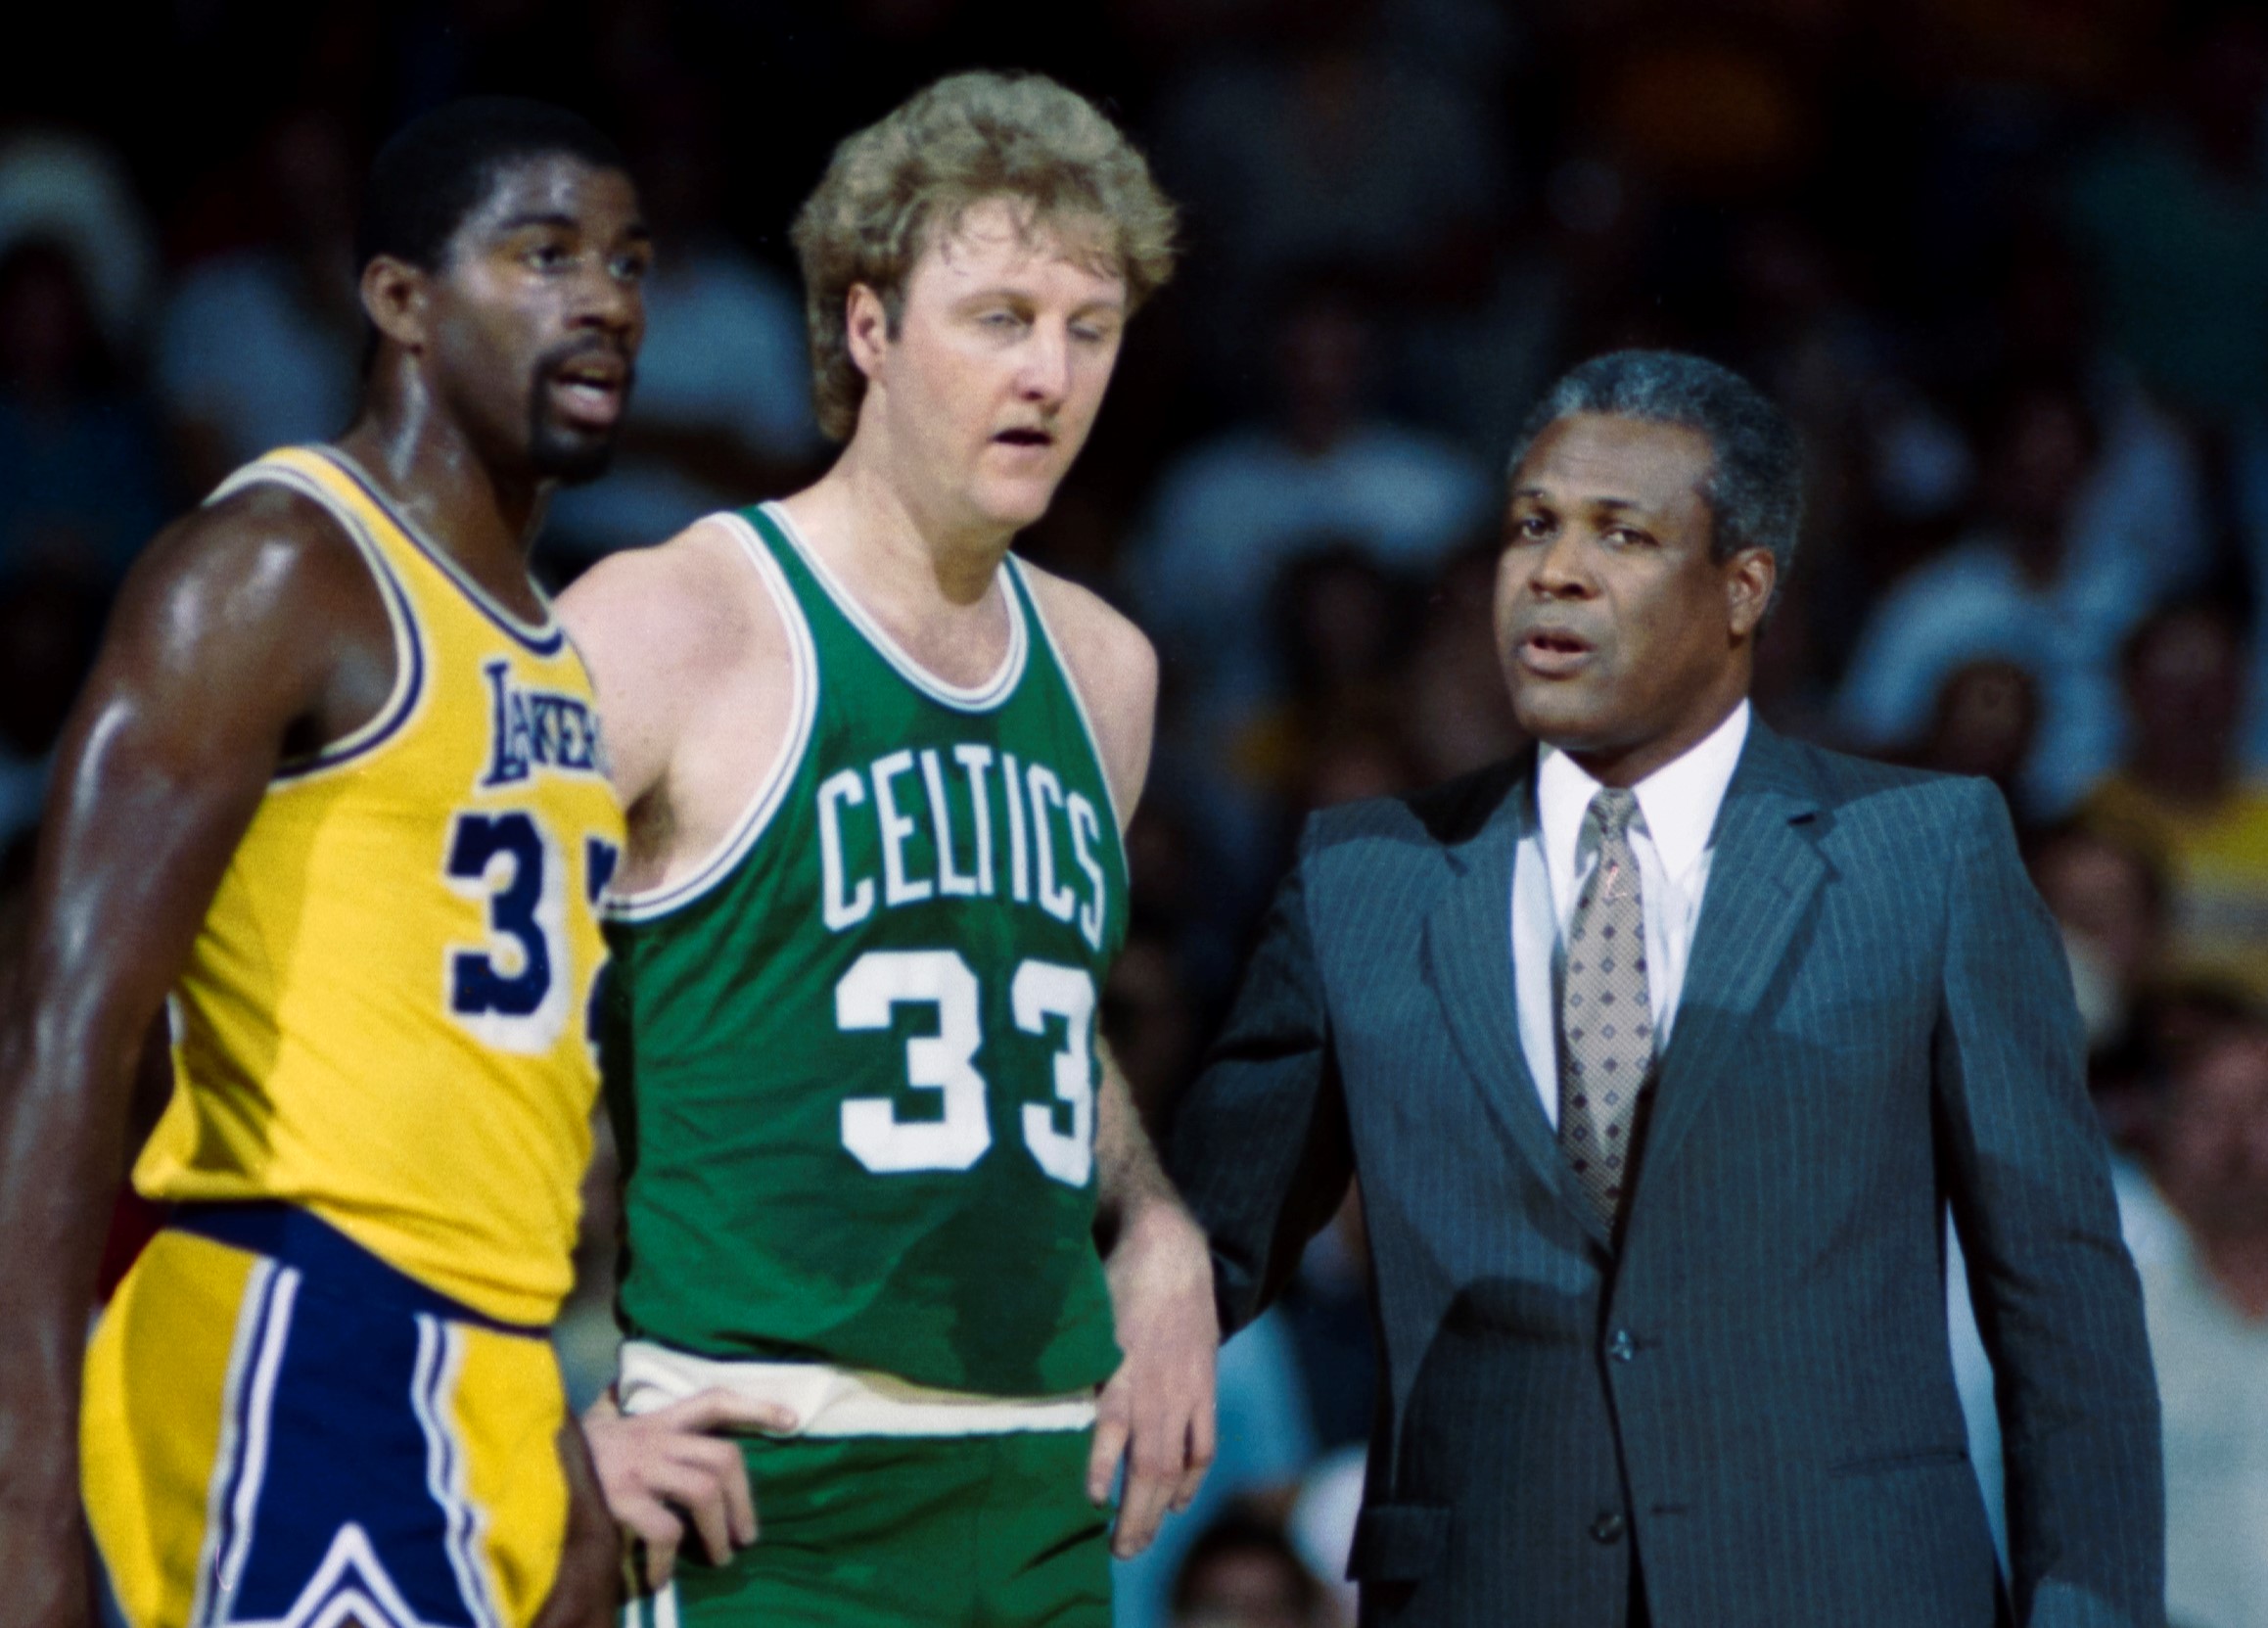 Los Angeles Lakers guard Magic Johnson and Boston Celtics forward Larry Bird.